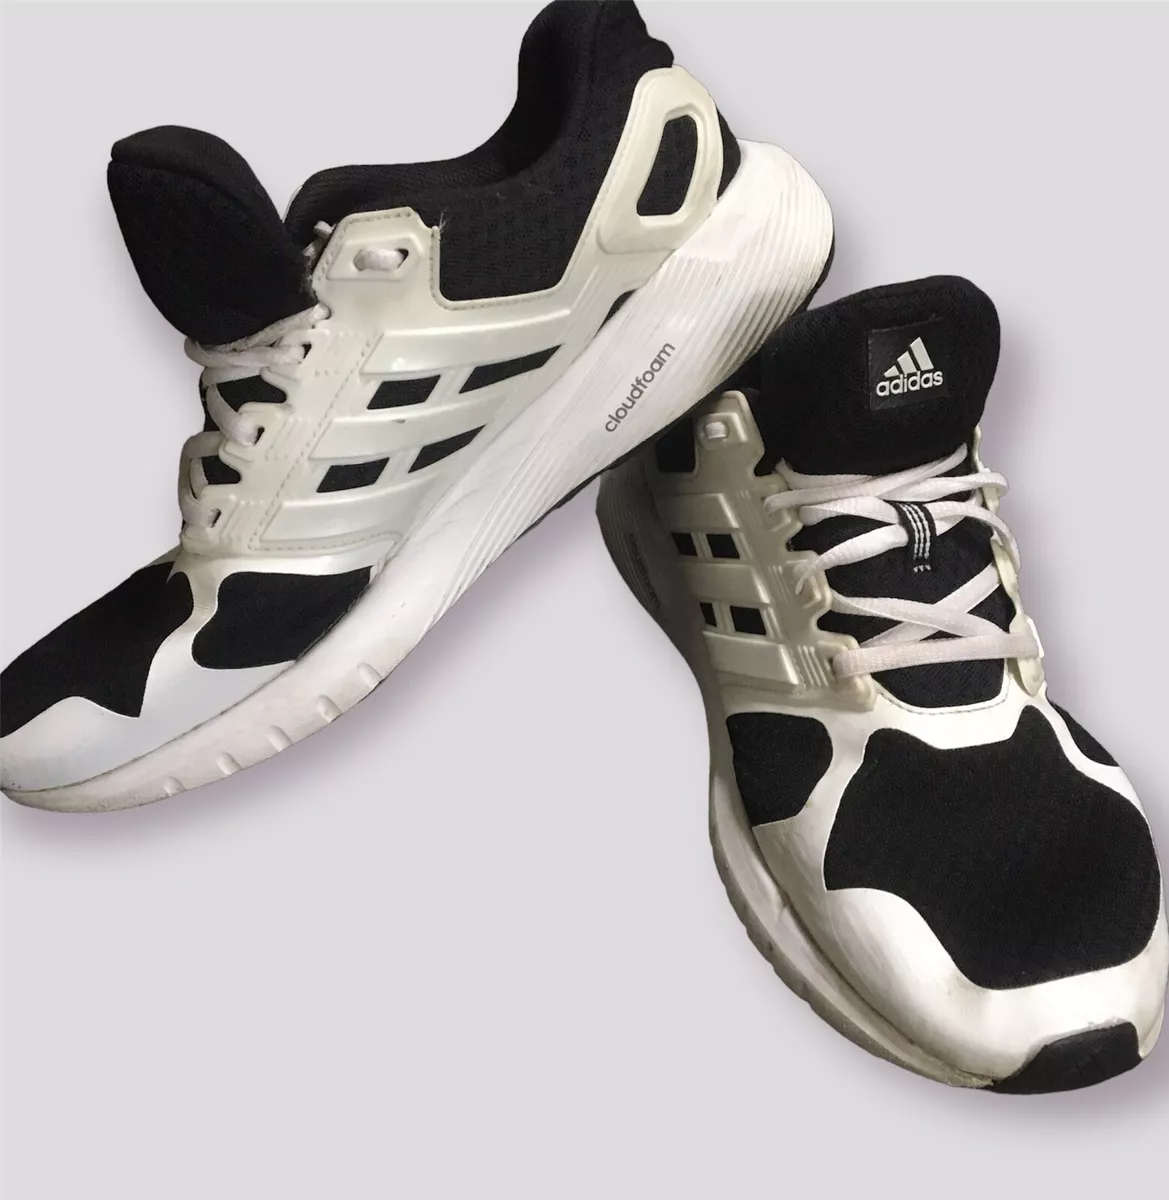 adidas men's workout shoes